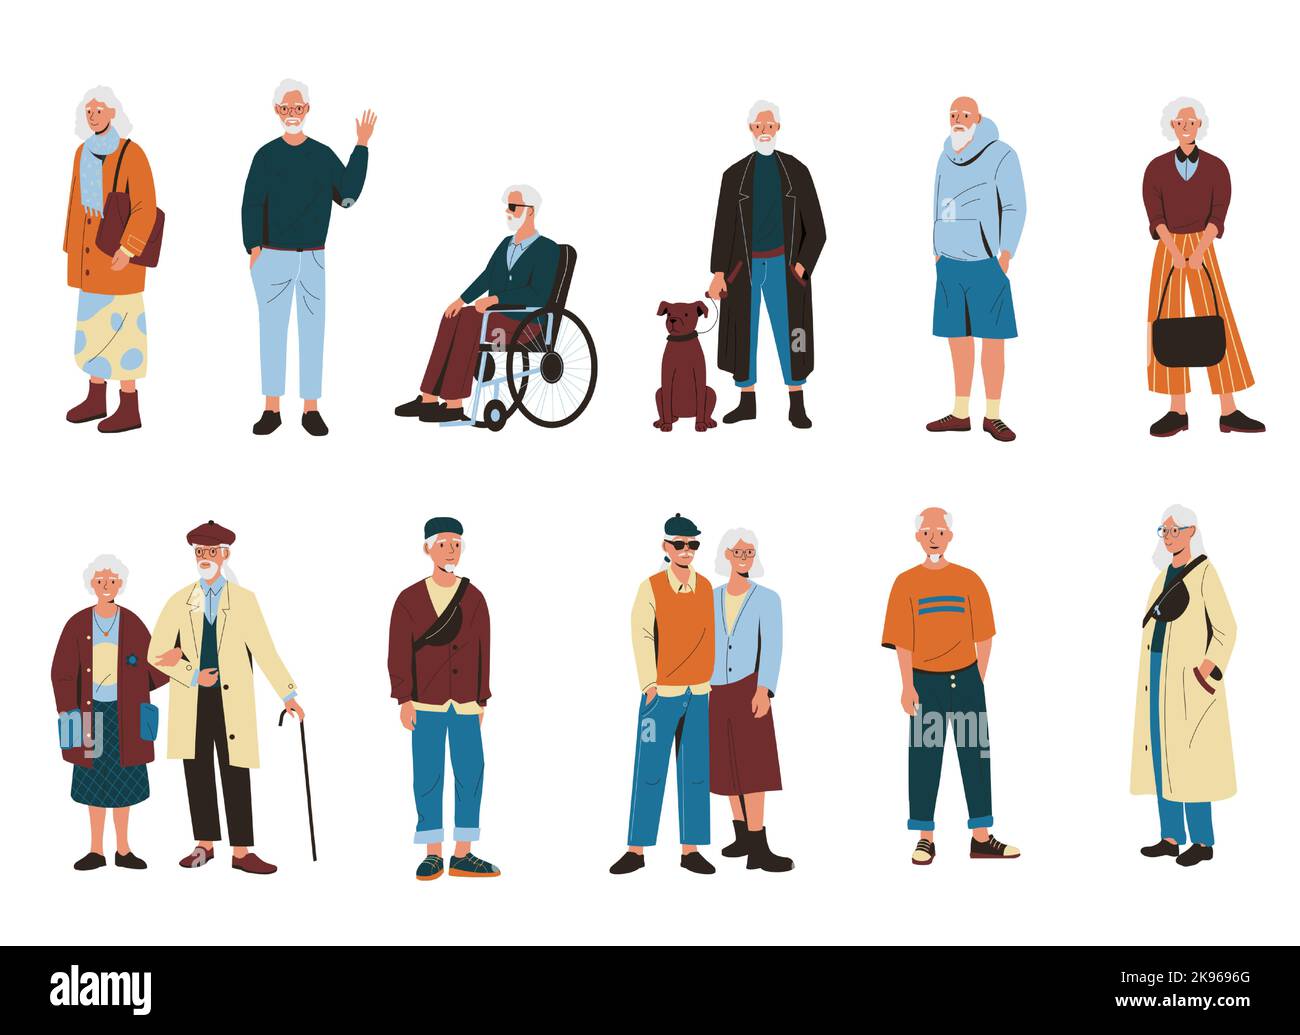 Ältere Menschen. Cartoon alter pensionierter Mann Frau, moderne reife Personen tragen trendige Mode-Kleidung, aktive ältere Charaktere im Ruhestand. Vektor Stock Vektor